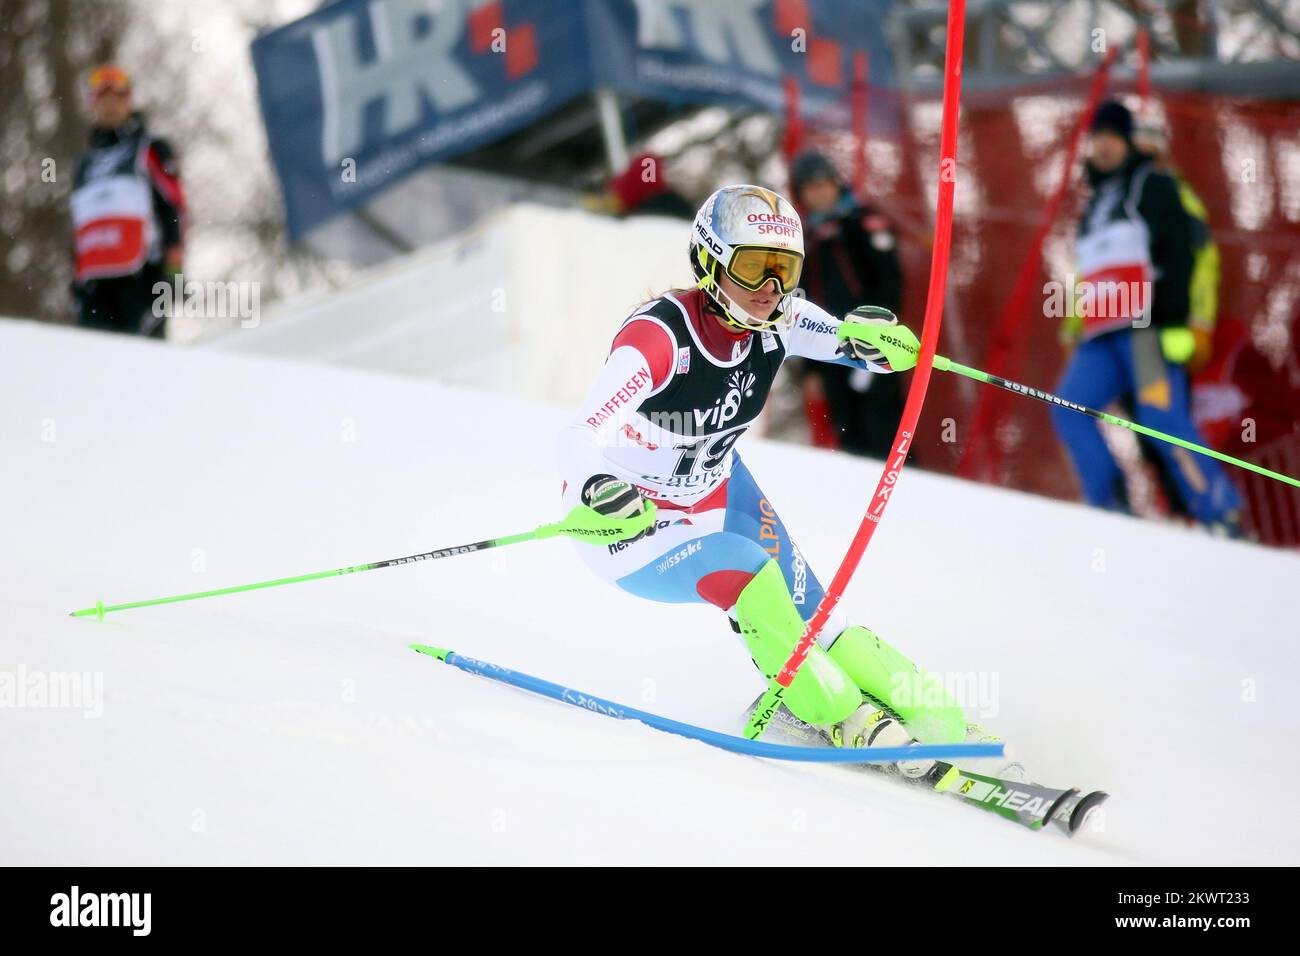 04.01.2015., Sljeme, Zagreb,Croatia - 10th Vip Snow Queen Trophy 2015. Female slalom race.1st run. Denise Feierabend Photo: Dalibor Urukalovic/PIXSELL Stock Photo